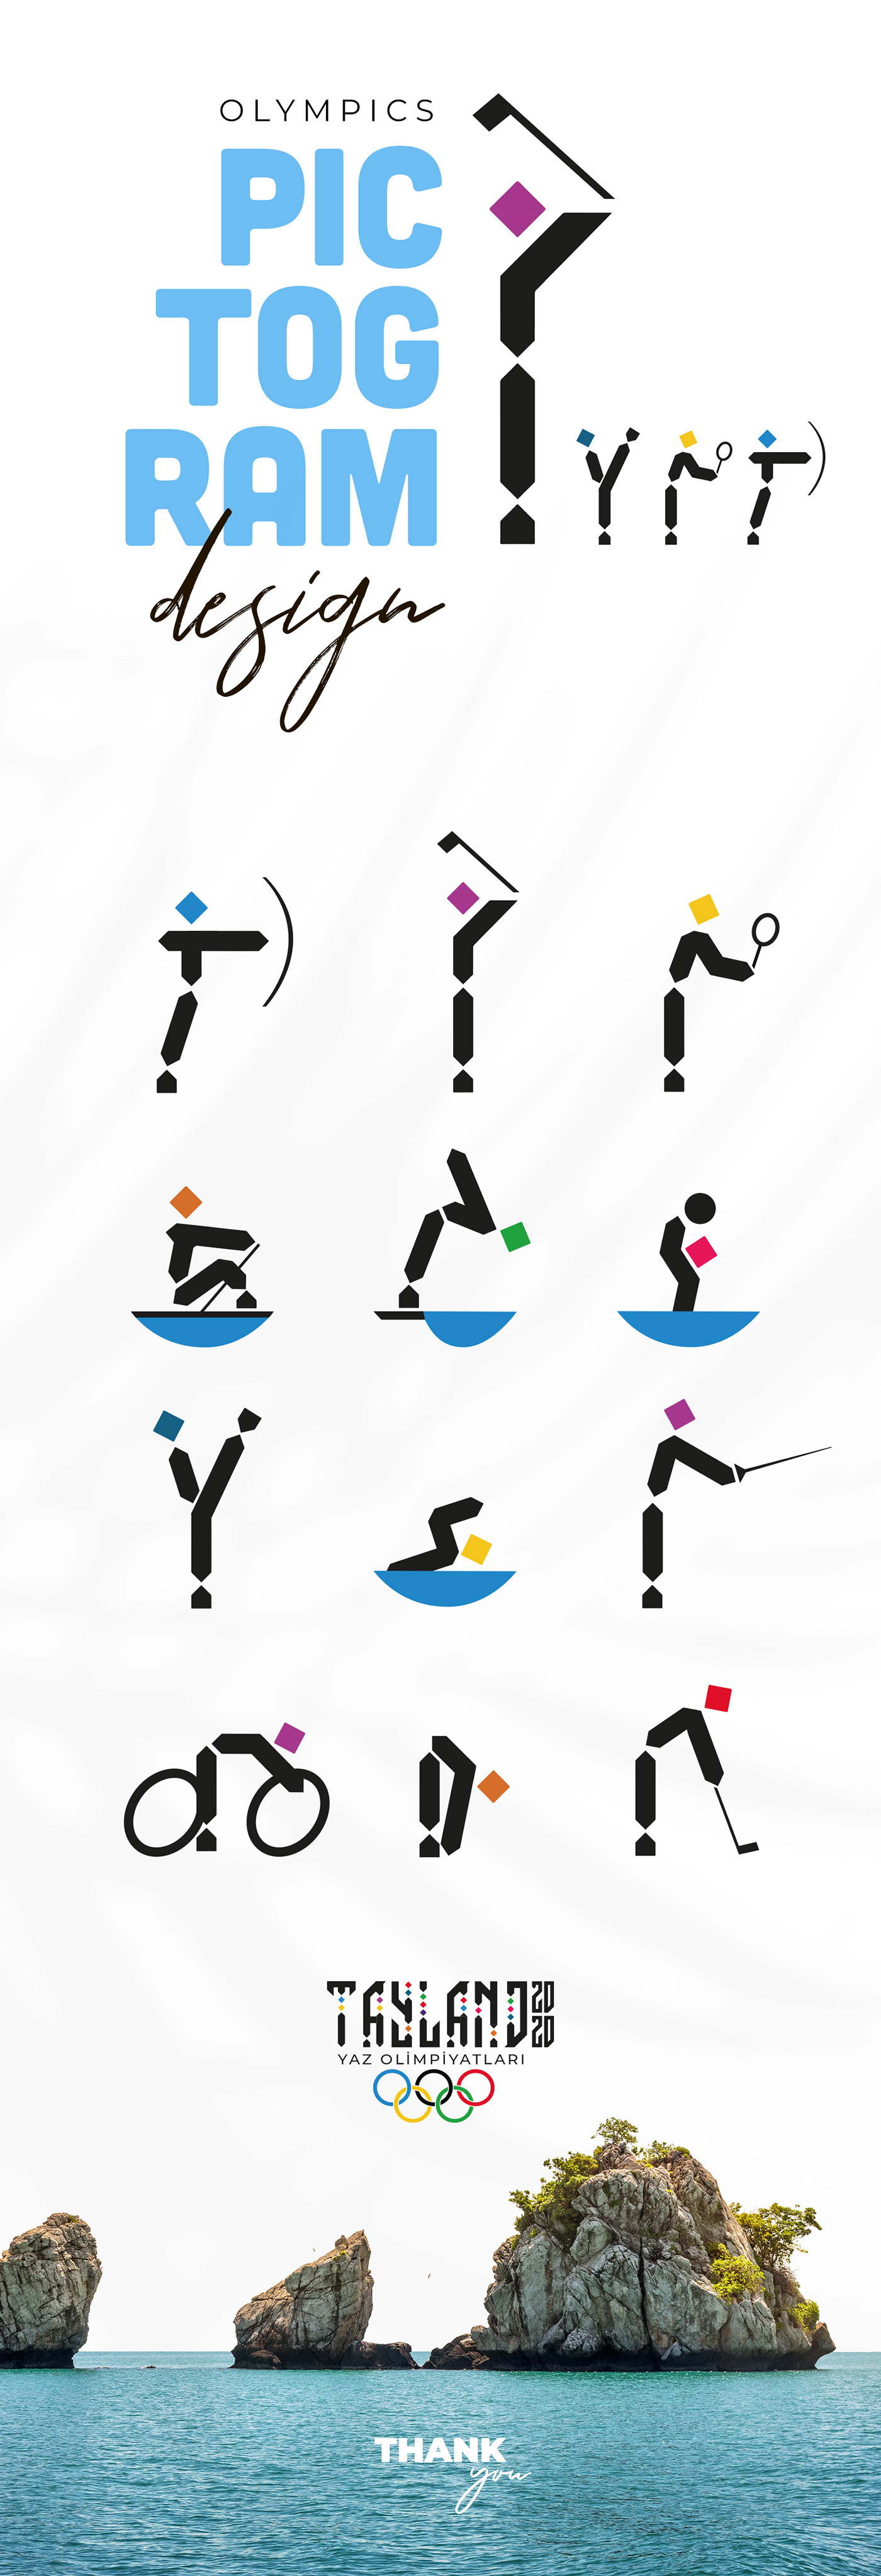 design graphicdesign Icon olimpiyat Olympics pictogram piktogram symbol vector